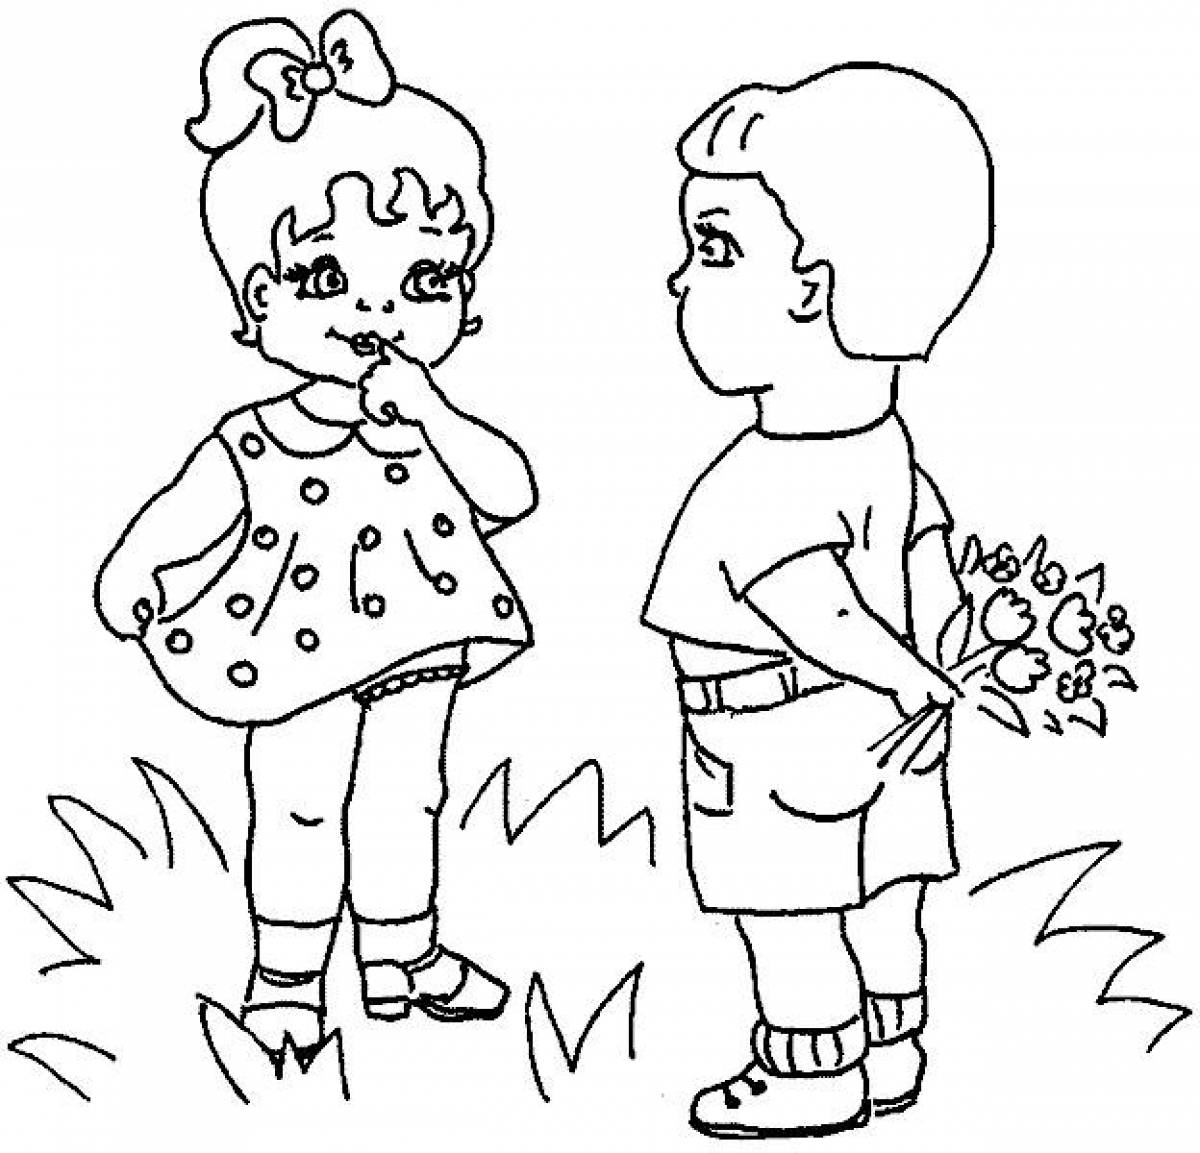 Boy gives a bouquet